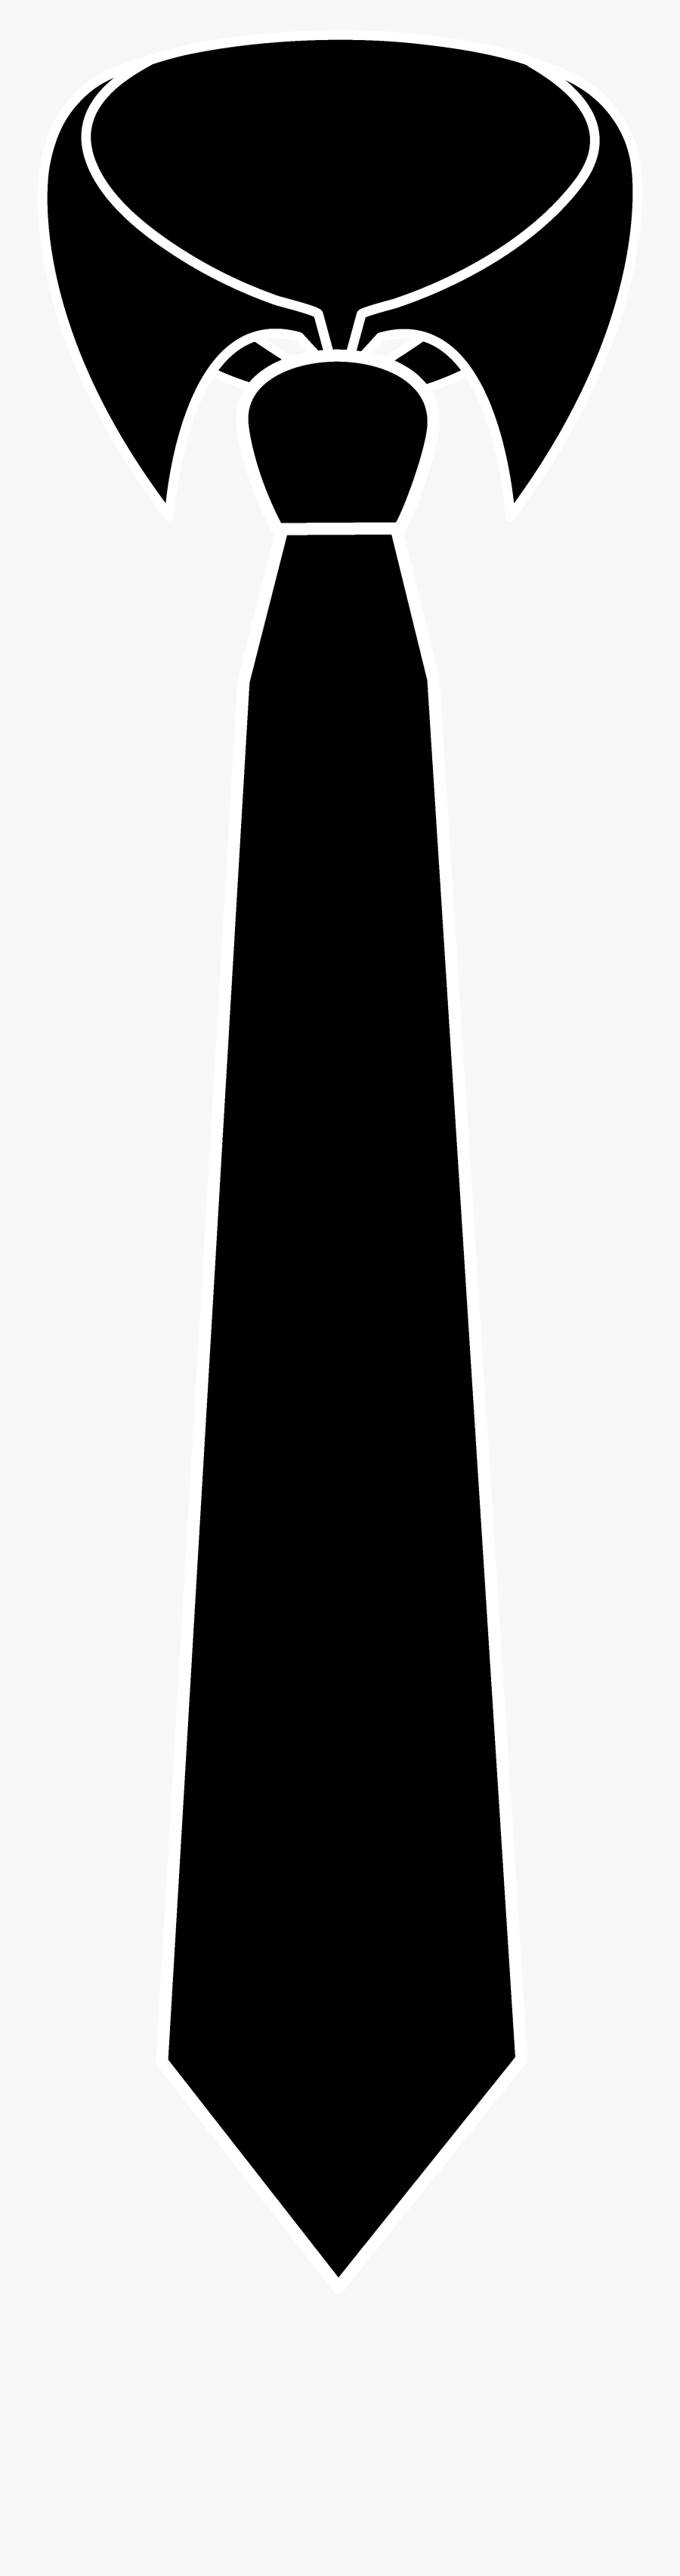 Tuxedo Tie Clipart - Black And White Tie Clip Art, Transparent Clipart